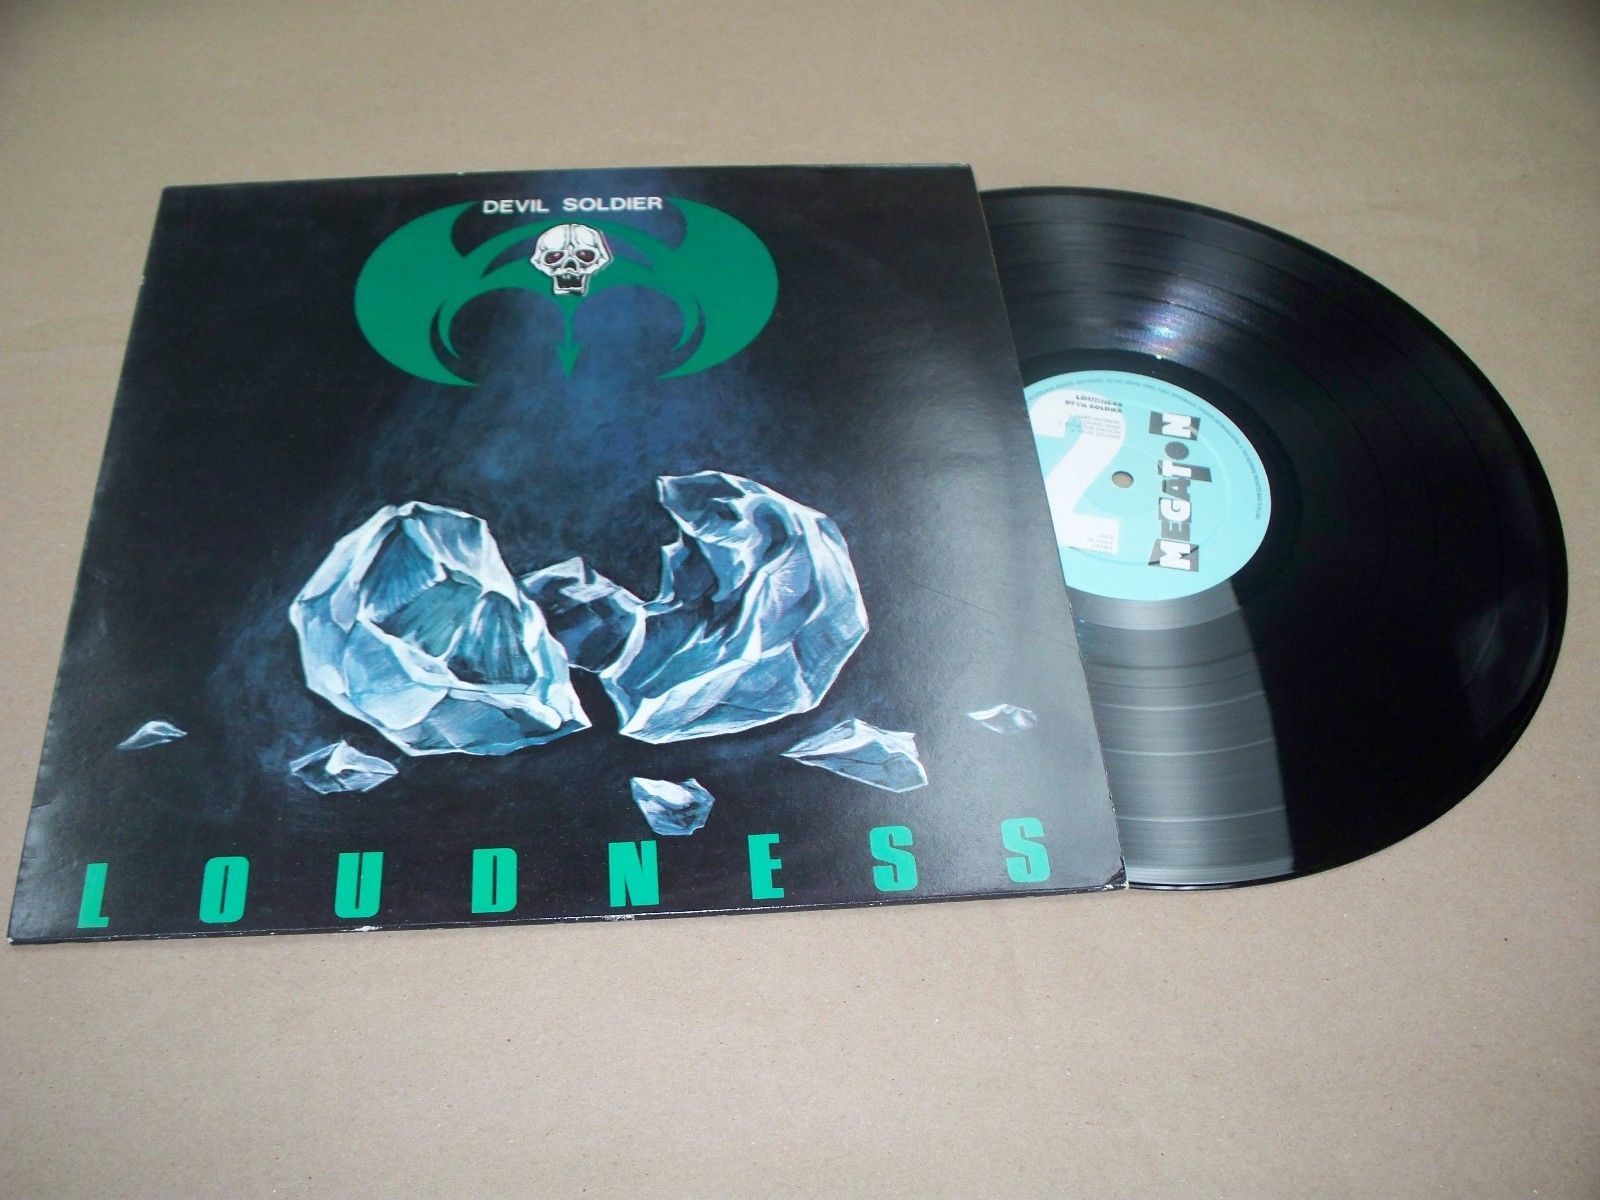 popsike.com - ## VINYL RECORD ALBUM,LOUDNESS DEVIL SOLDIER,08